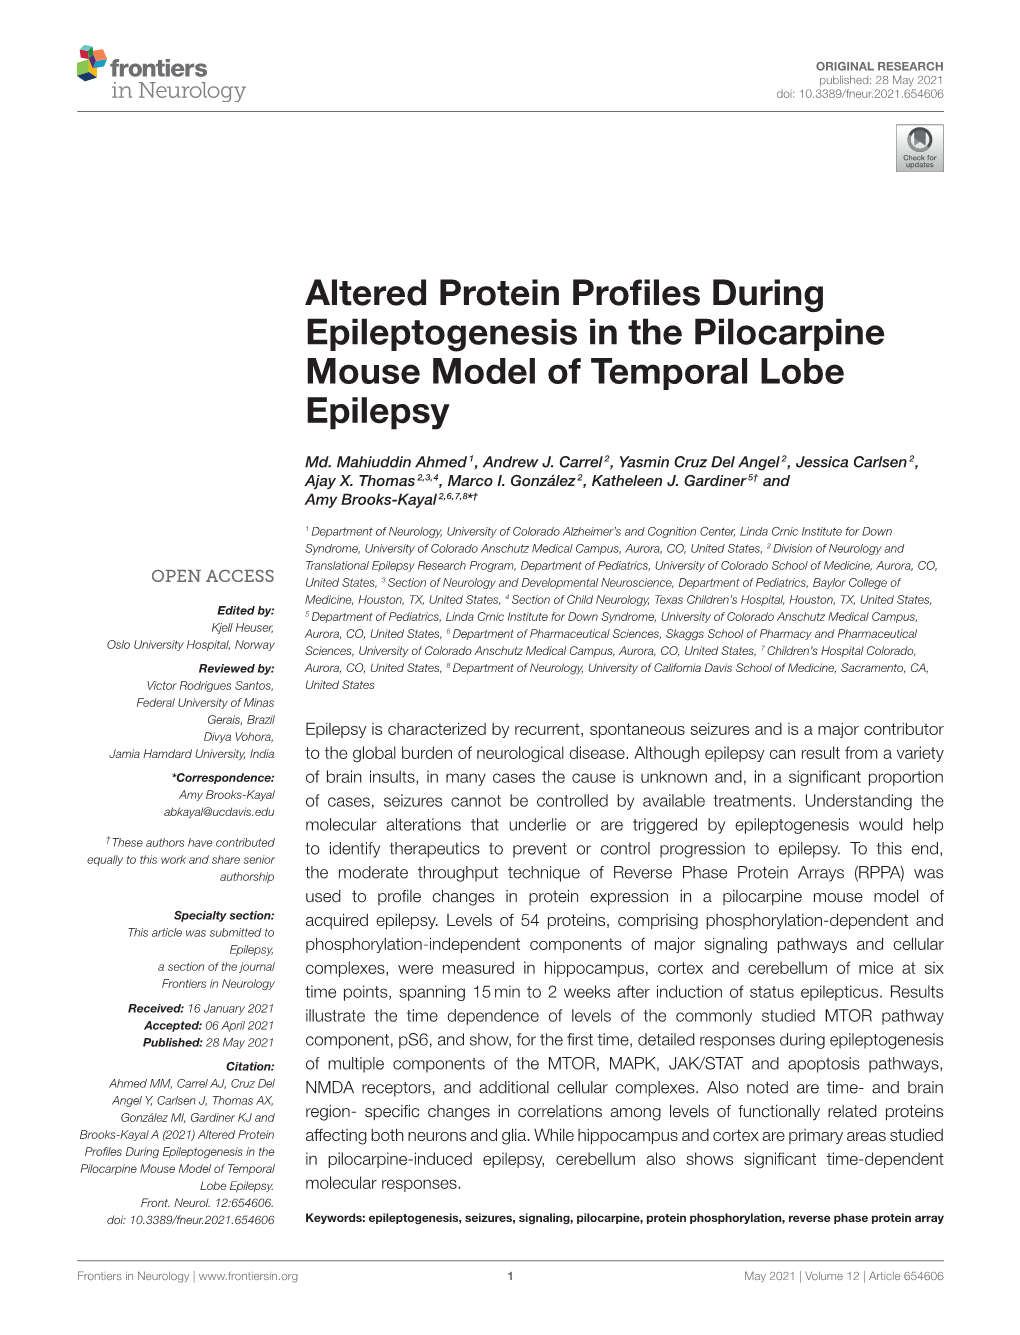 Altered Protein Profiles During Epileptogenesis in the Pilocarpine